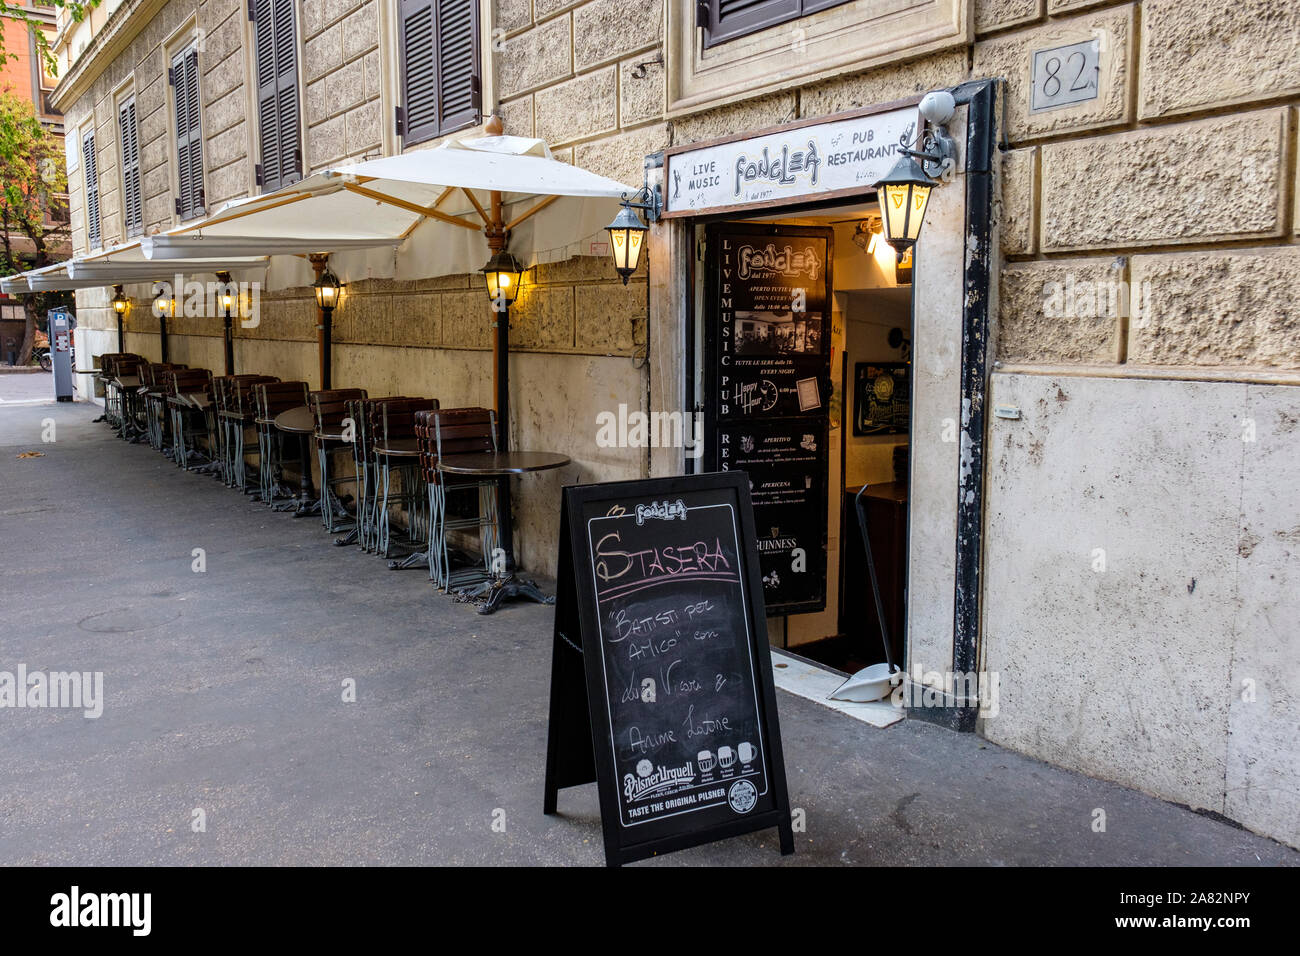 Fonclea Srl Restaurant, traditional pub with live music, Prati neighbourhood, Rome, Italy Stock Photo